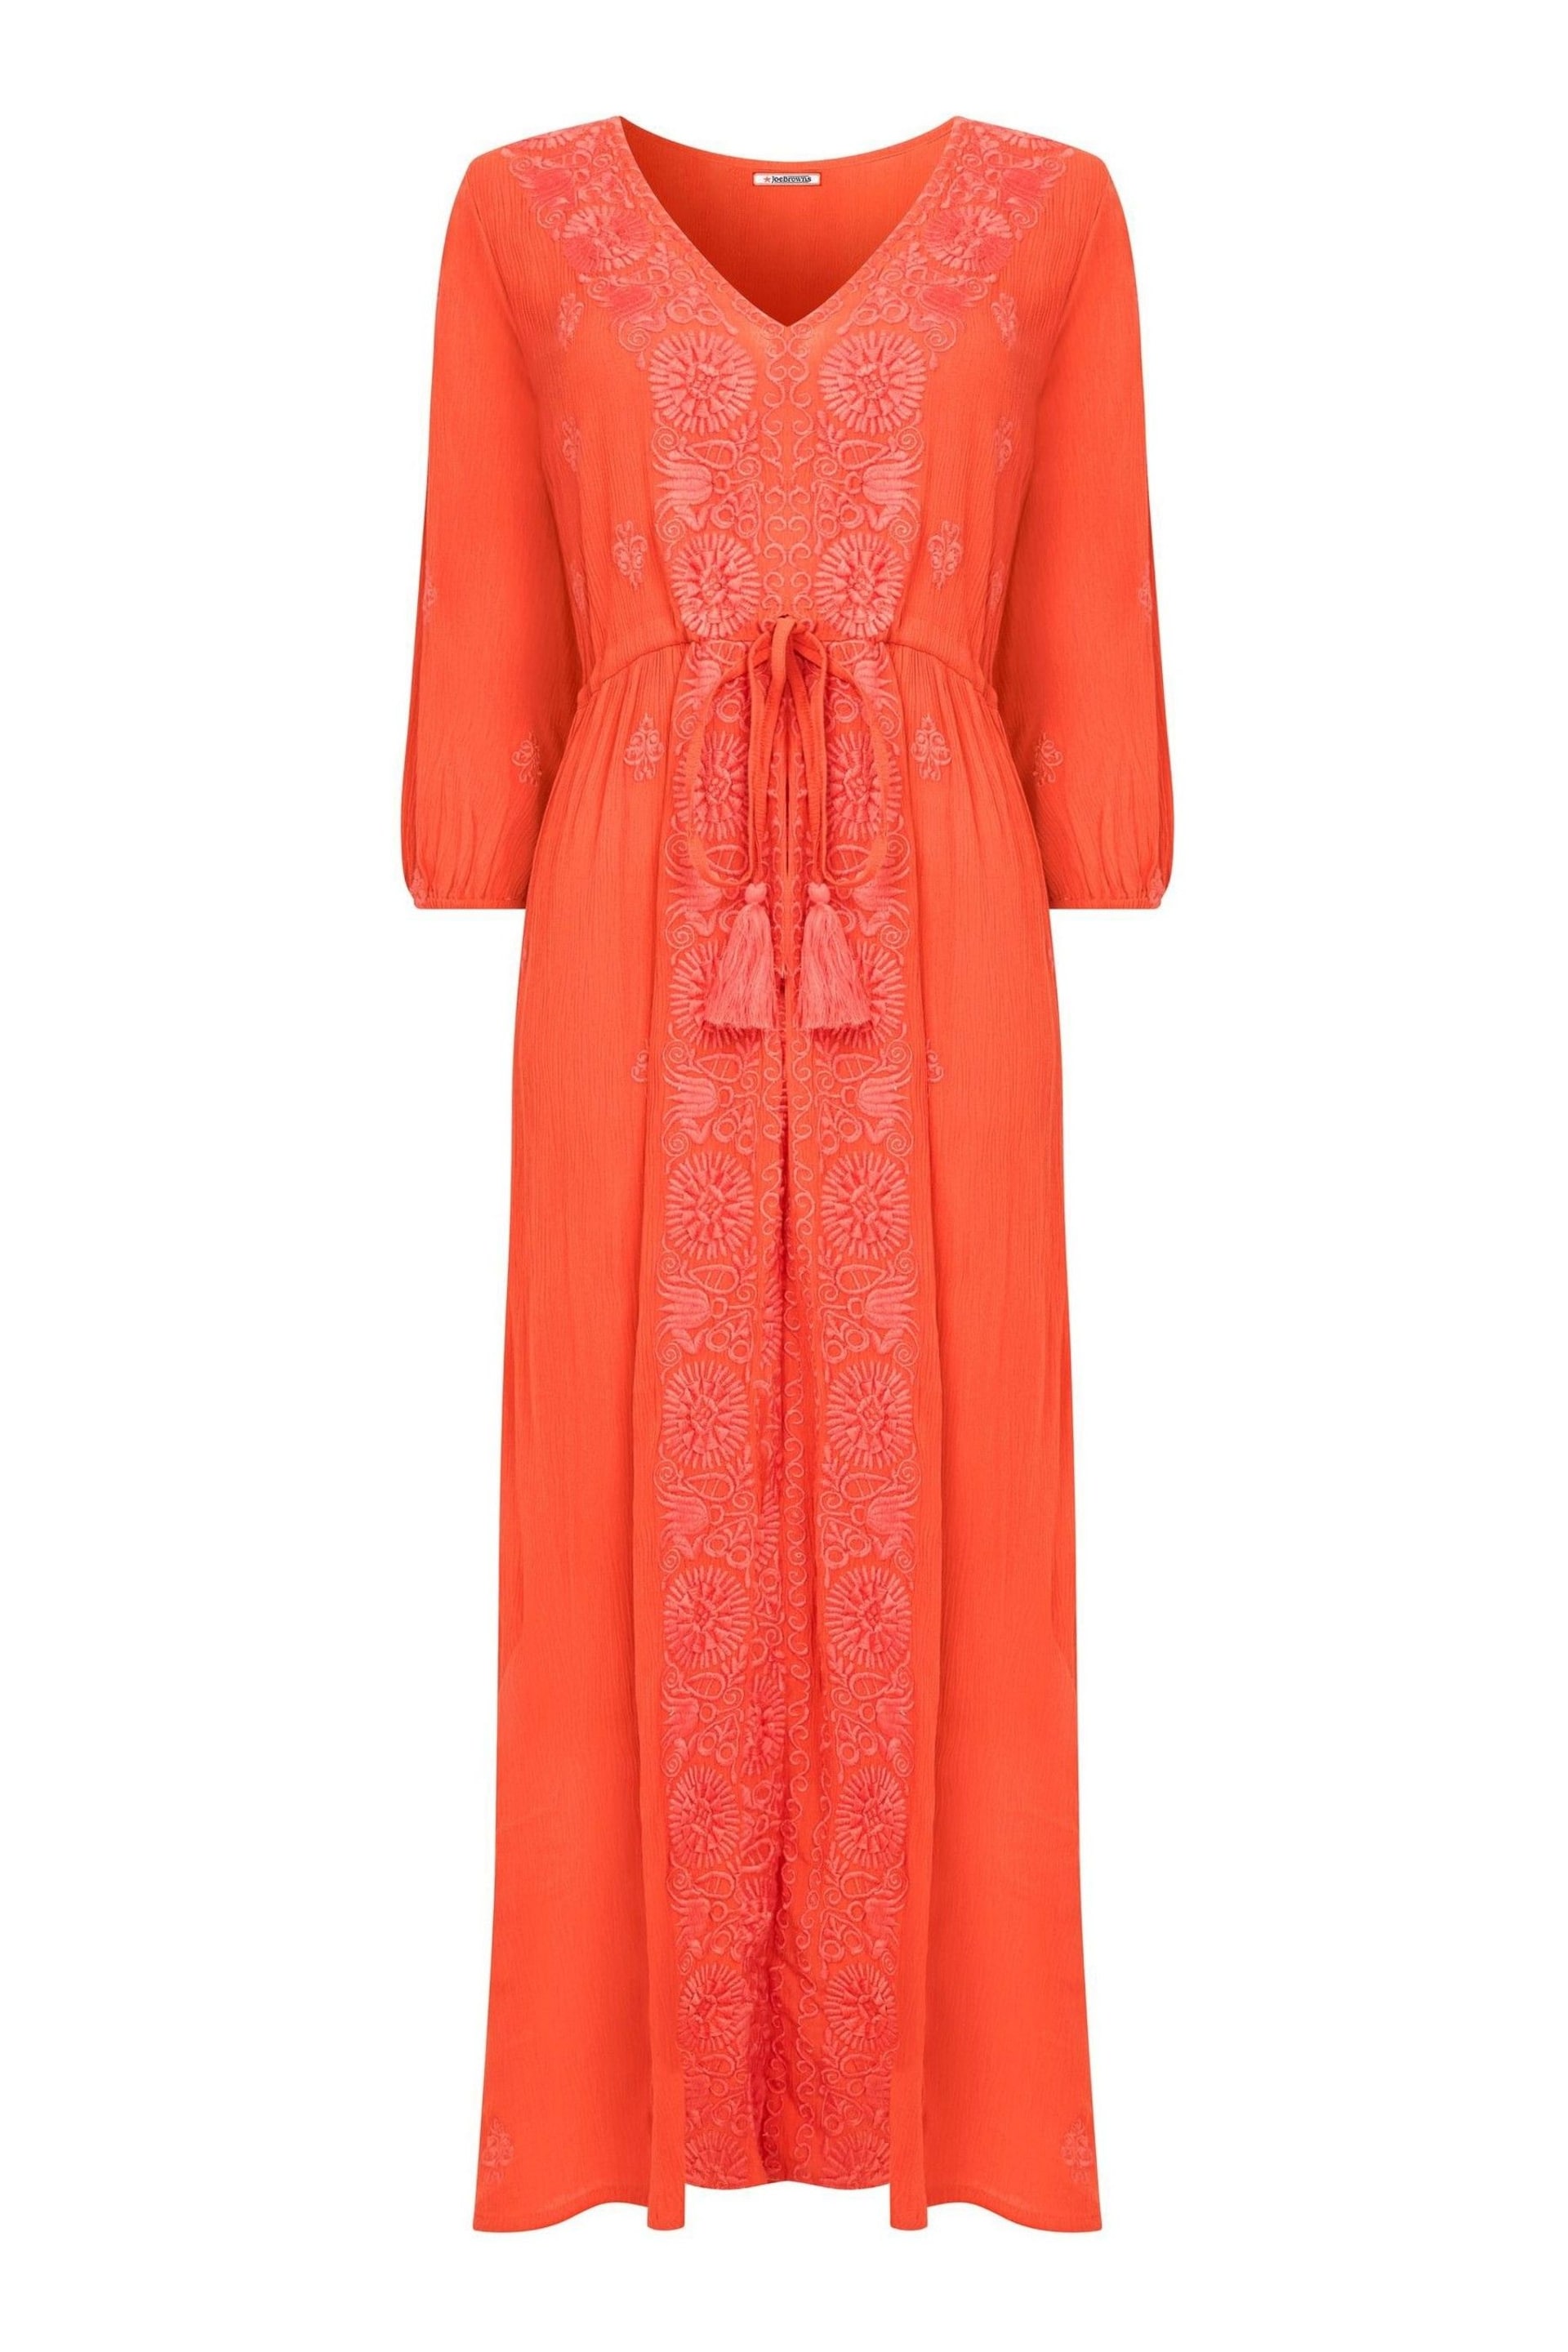 Joe Browns Orange Embroidered Maxi Dress - Image 5 of 5